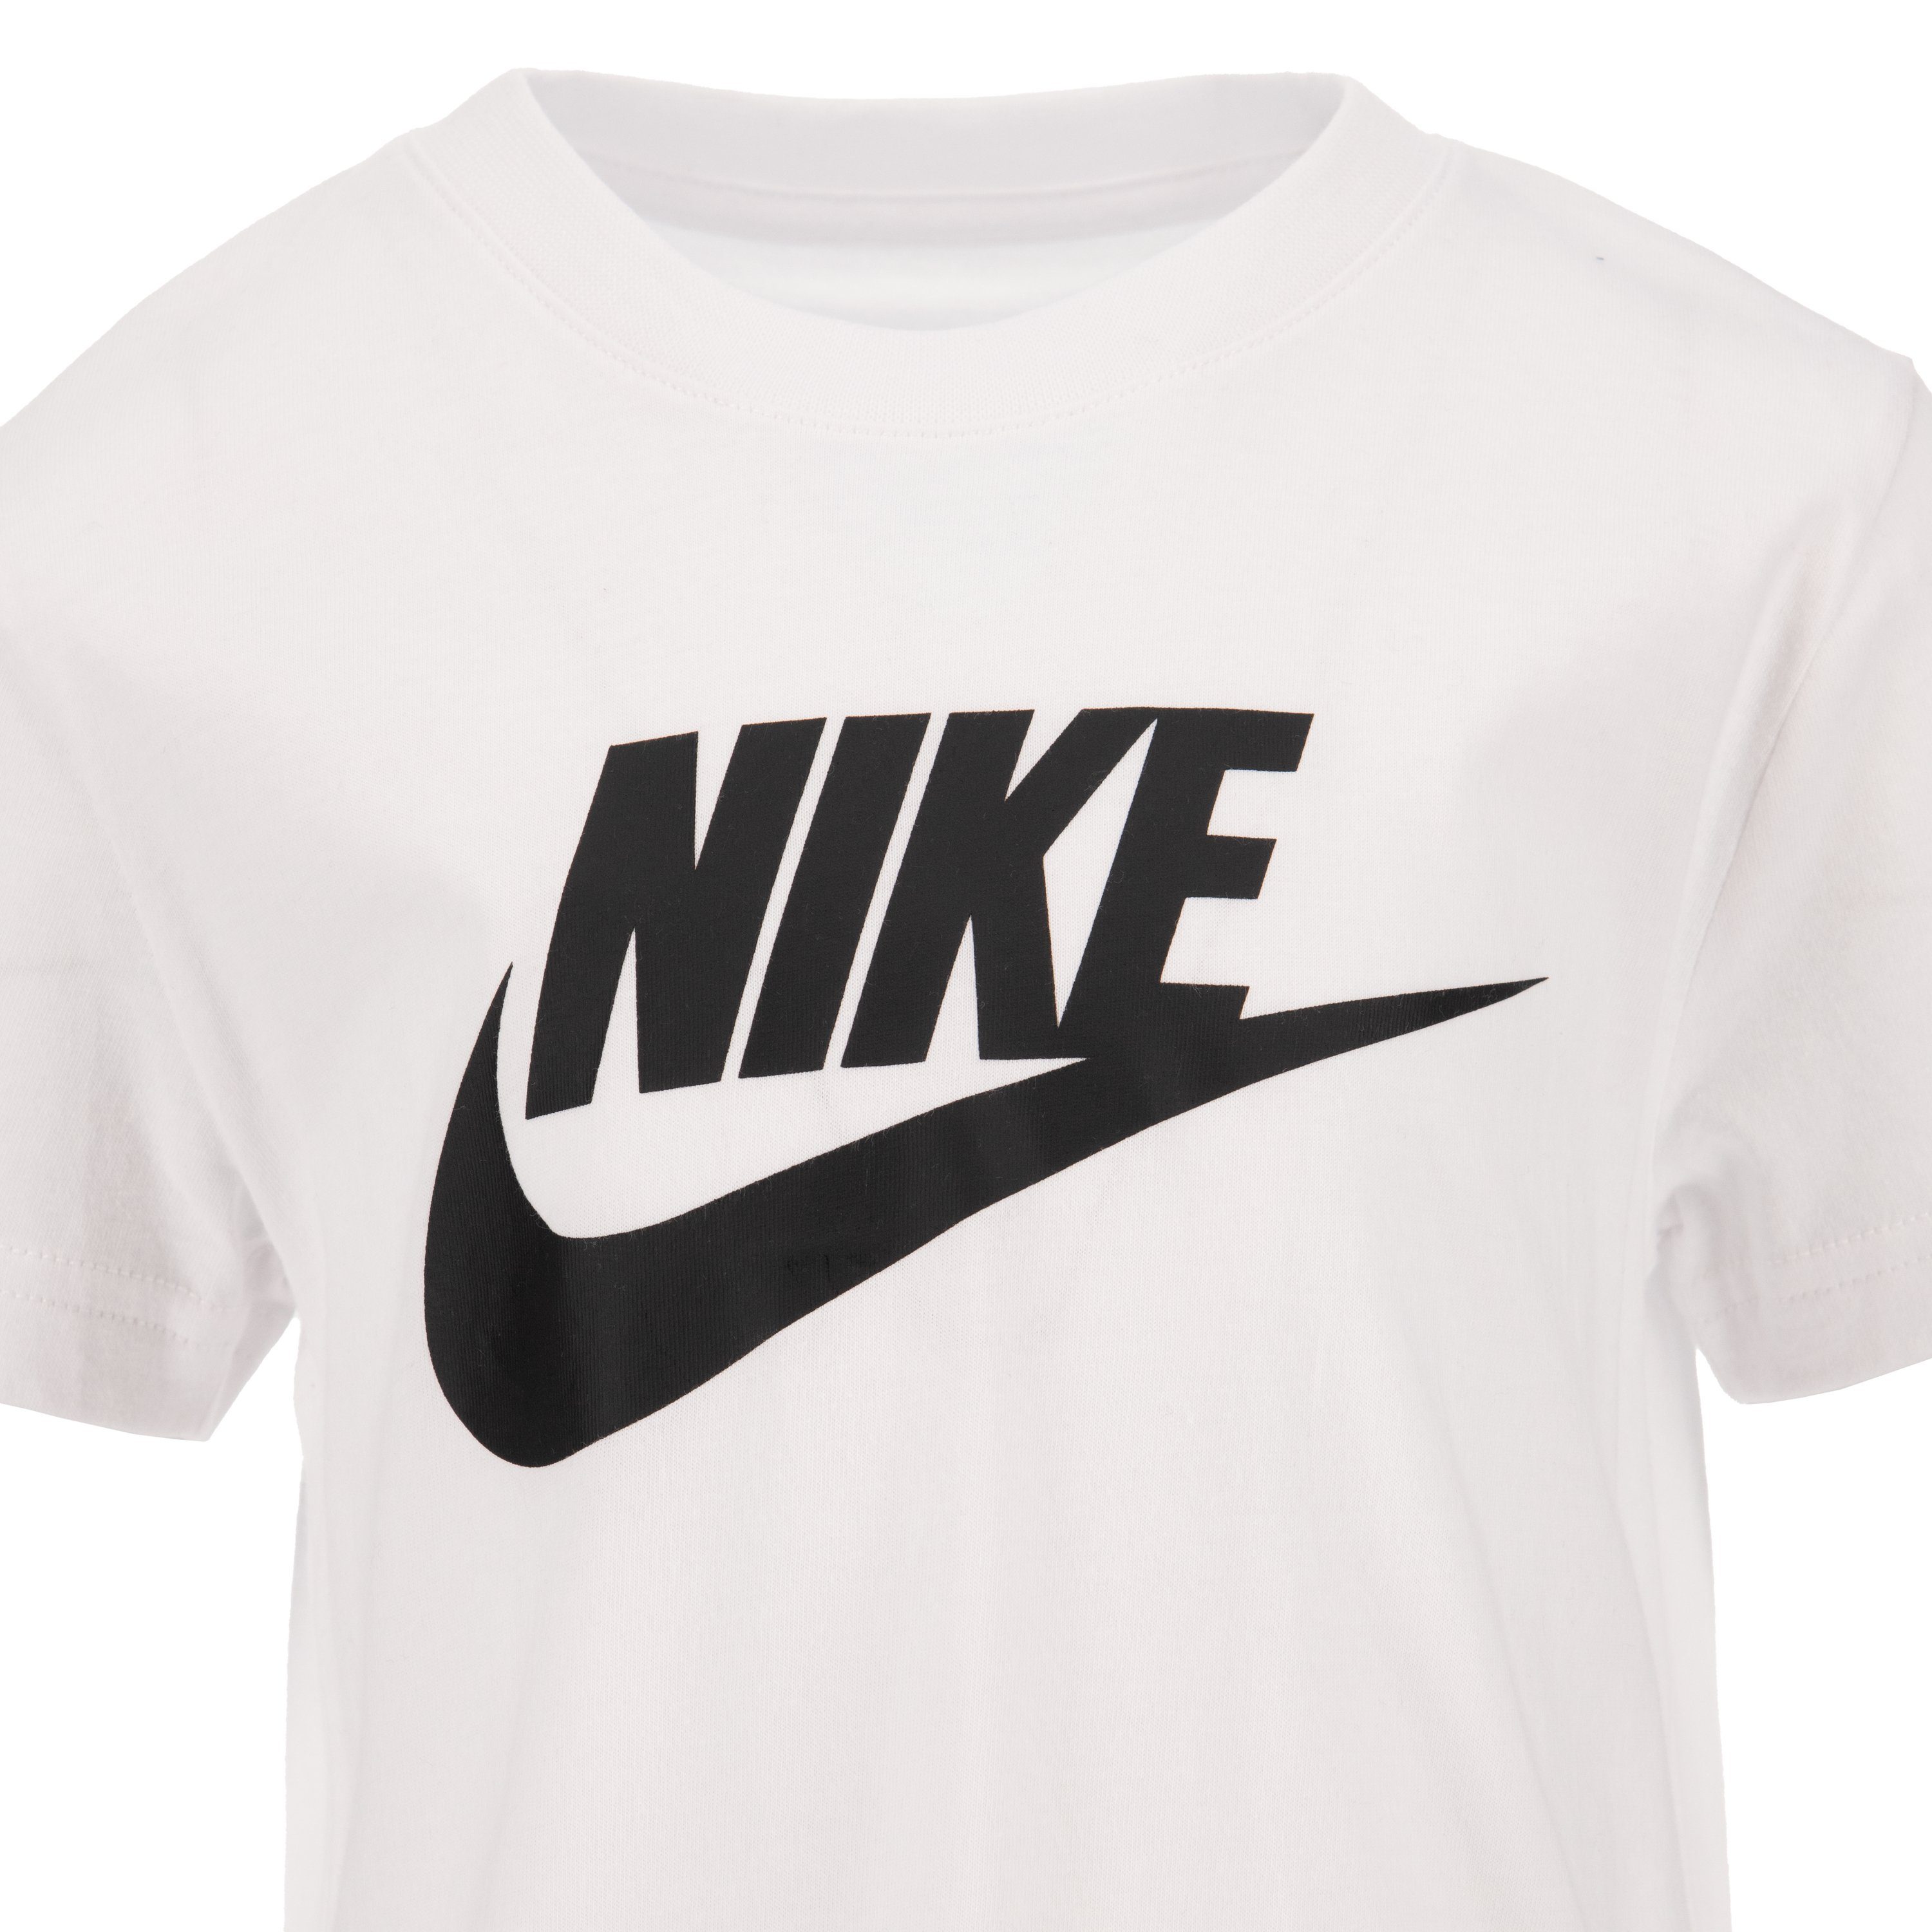 TEE FUTURA white NIKE Kinder Short NKB - Nike Sleeve Sportswear T-Shirt für